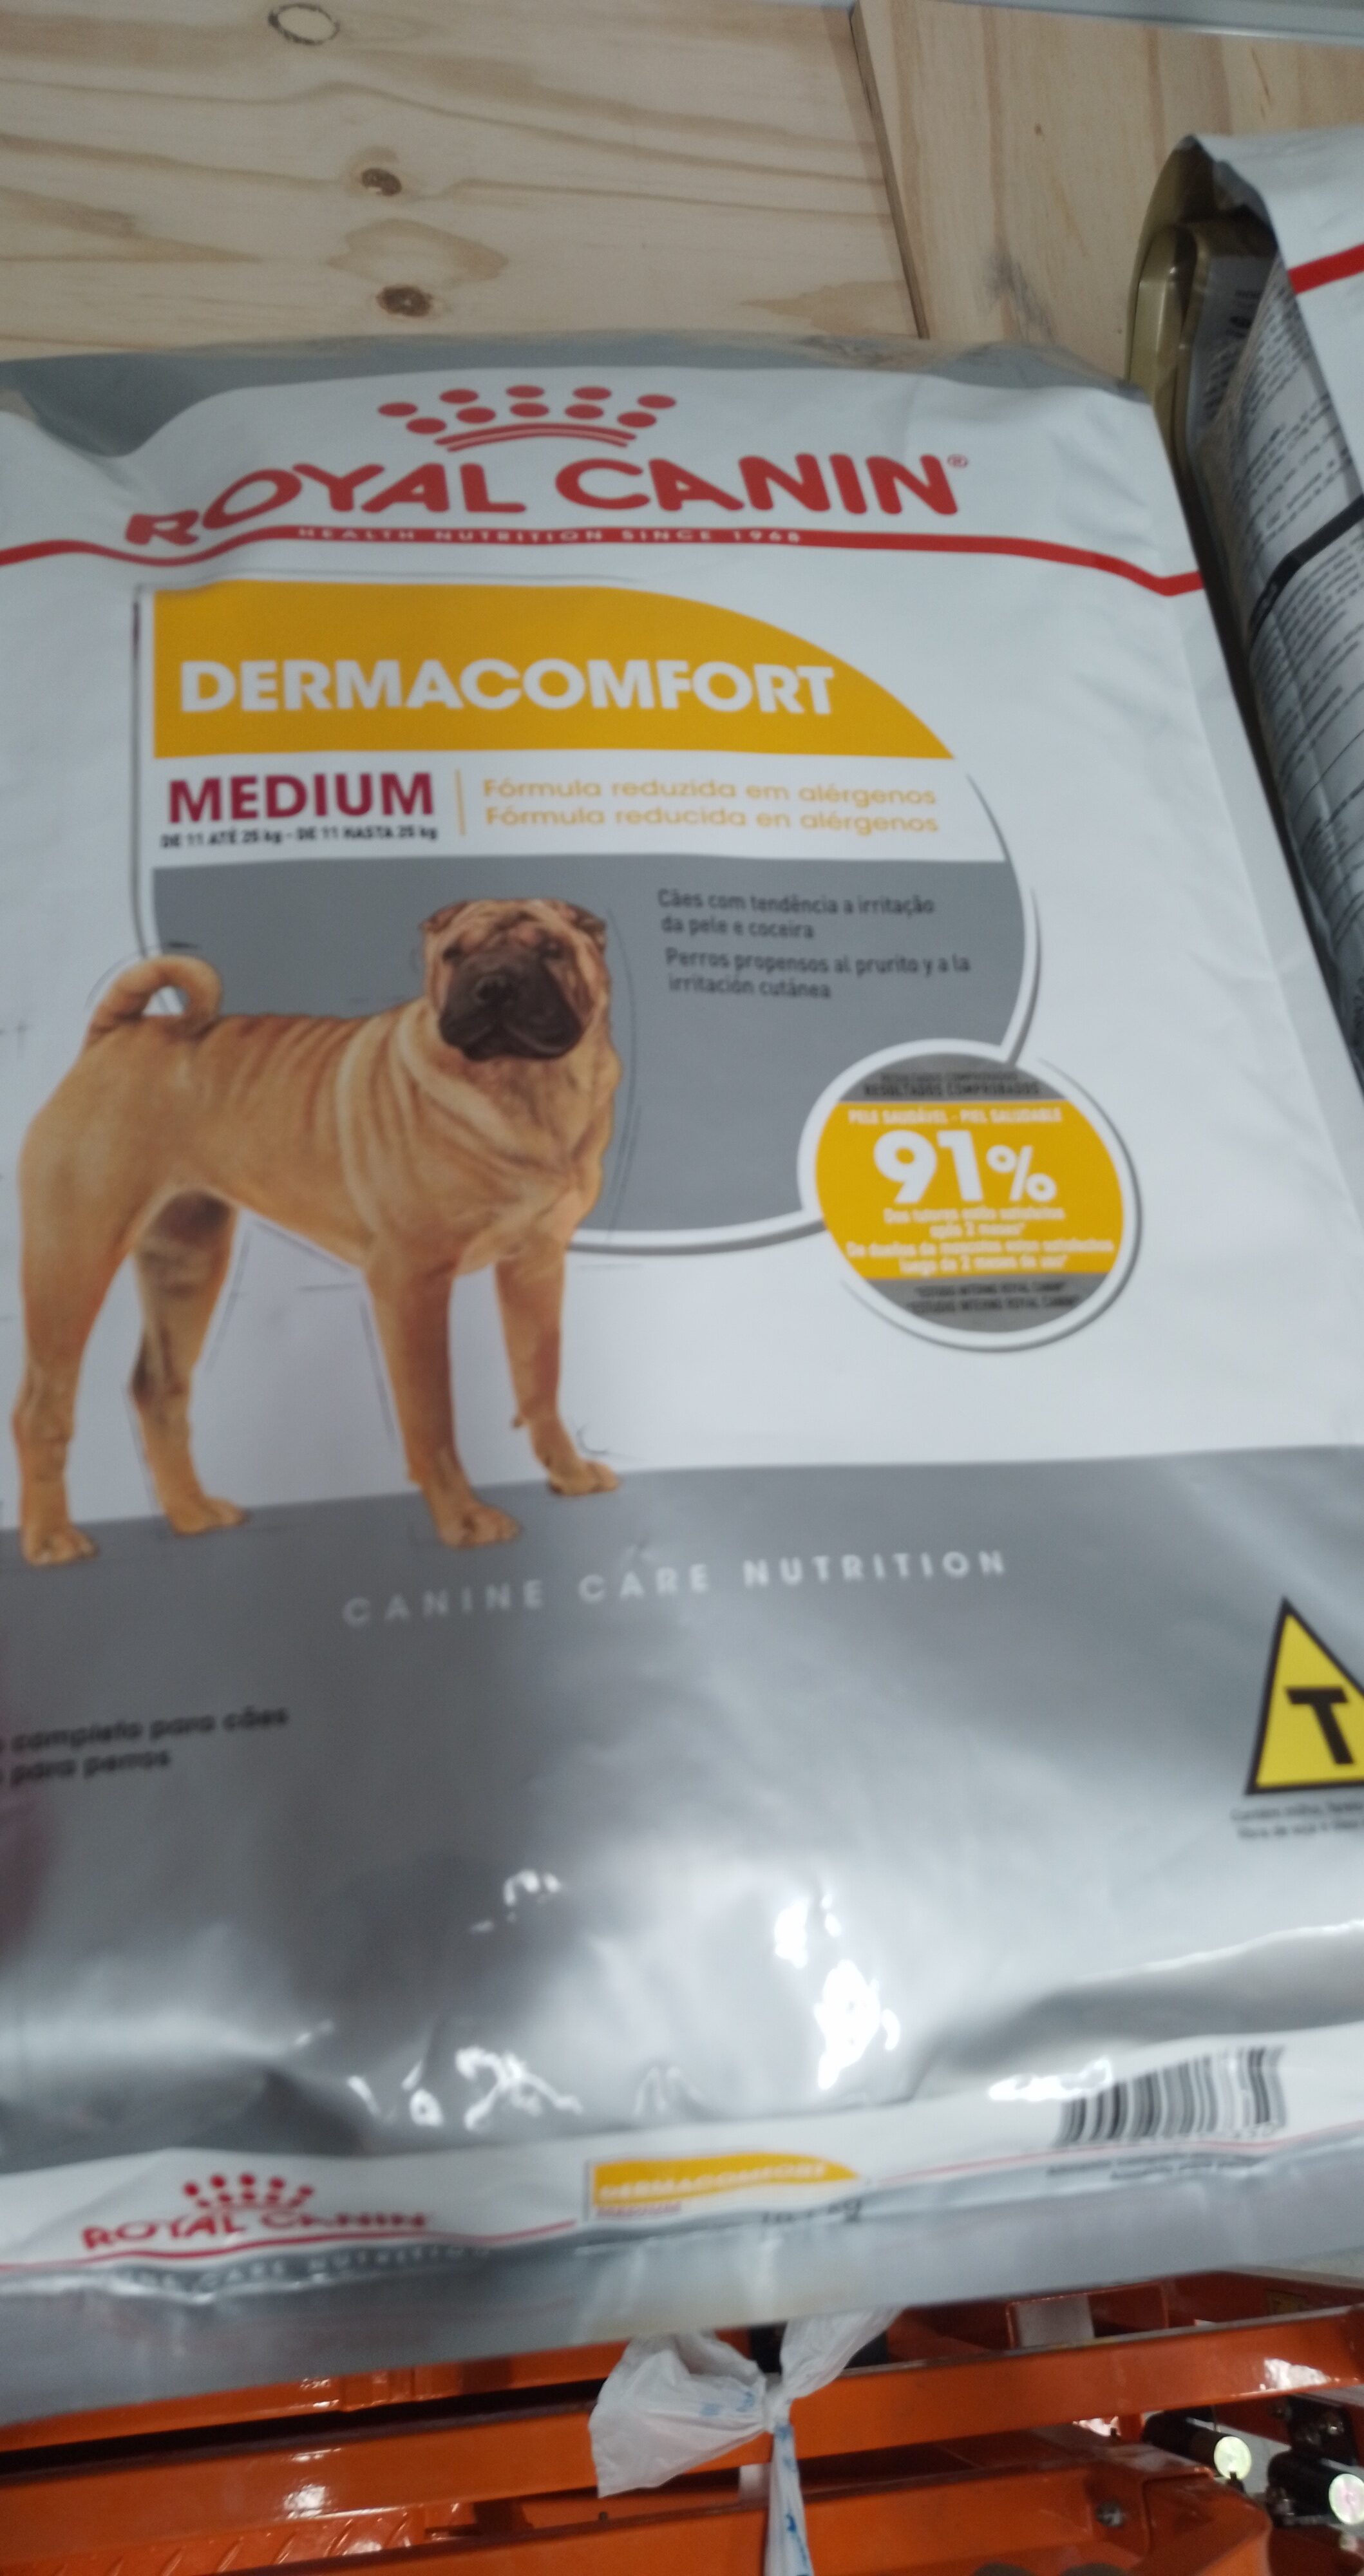 Royal caes dermacomfort - Product - pt